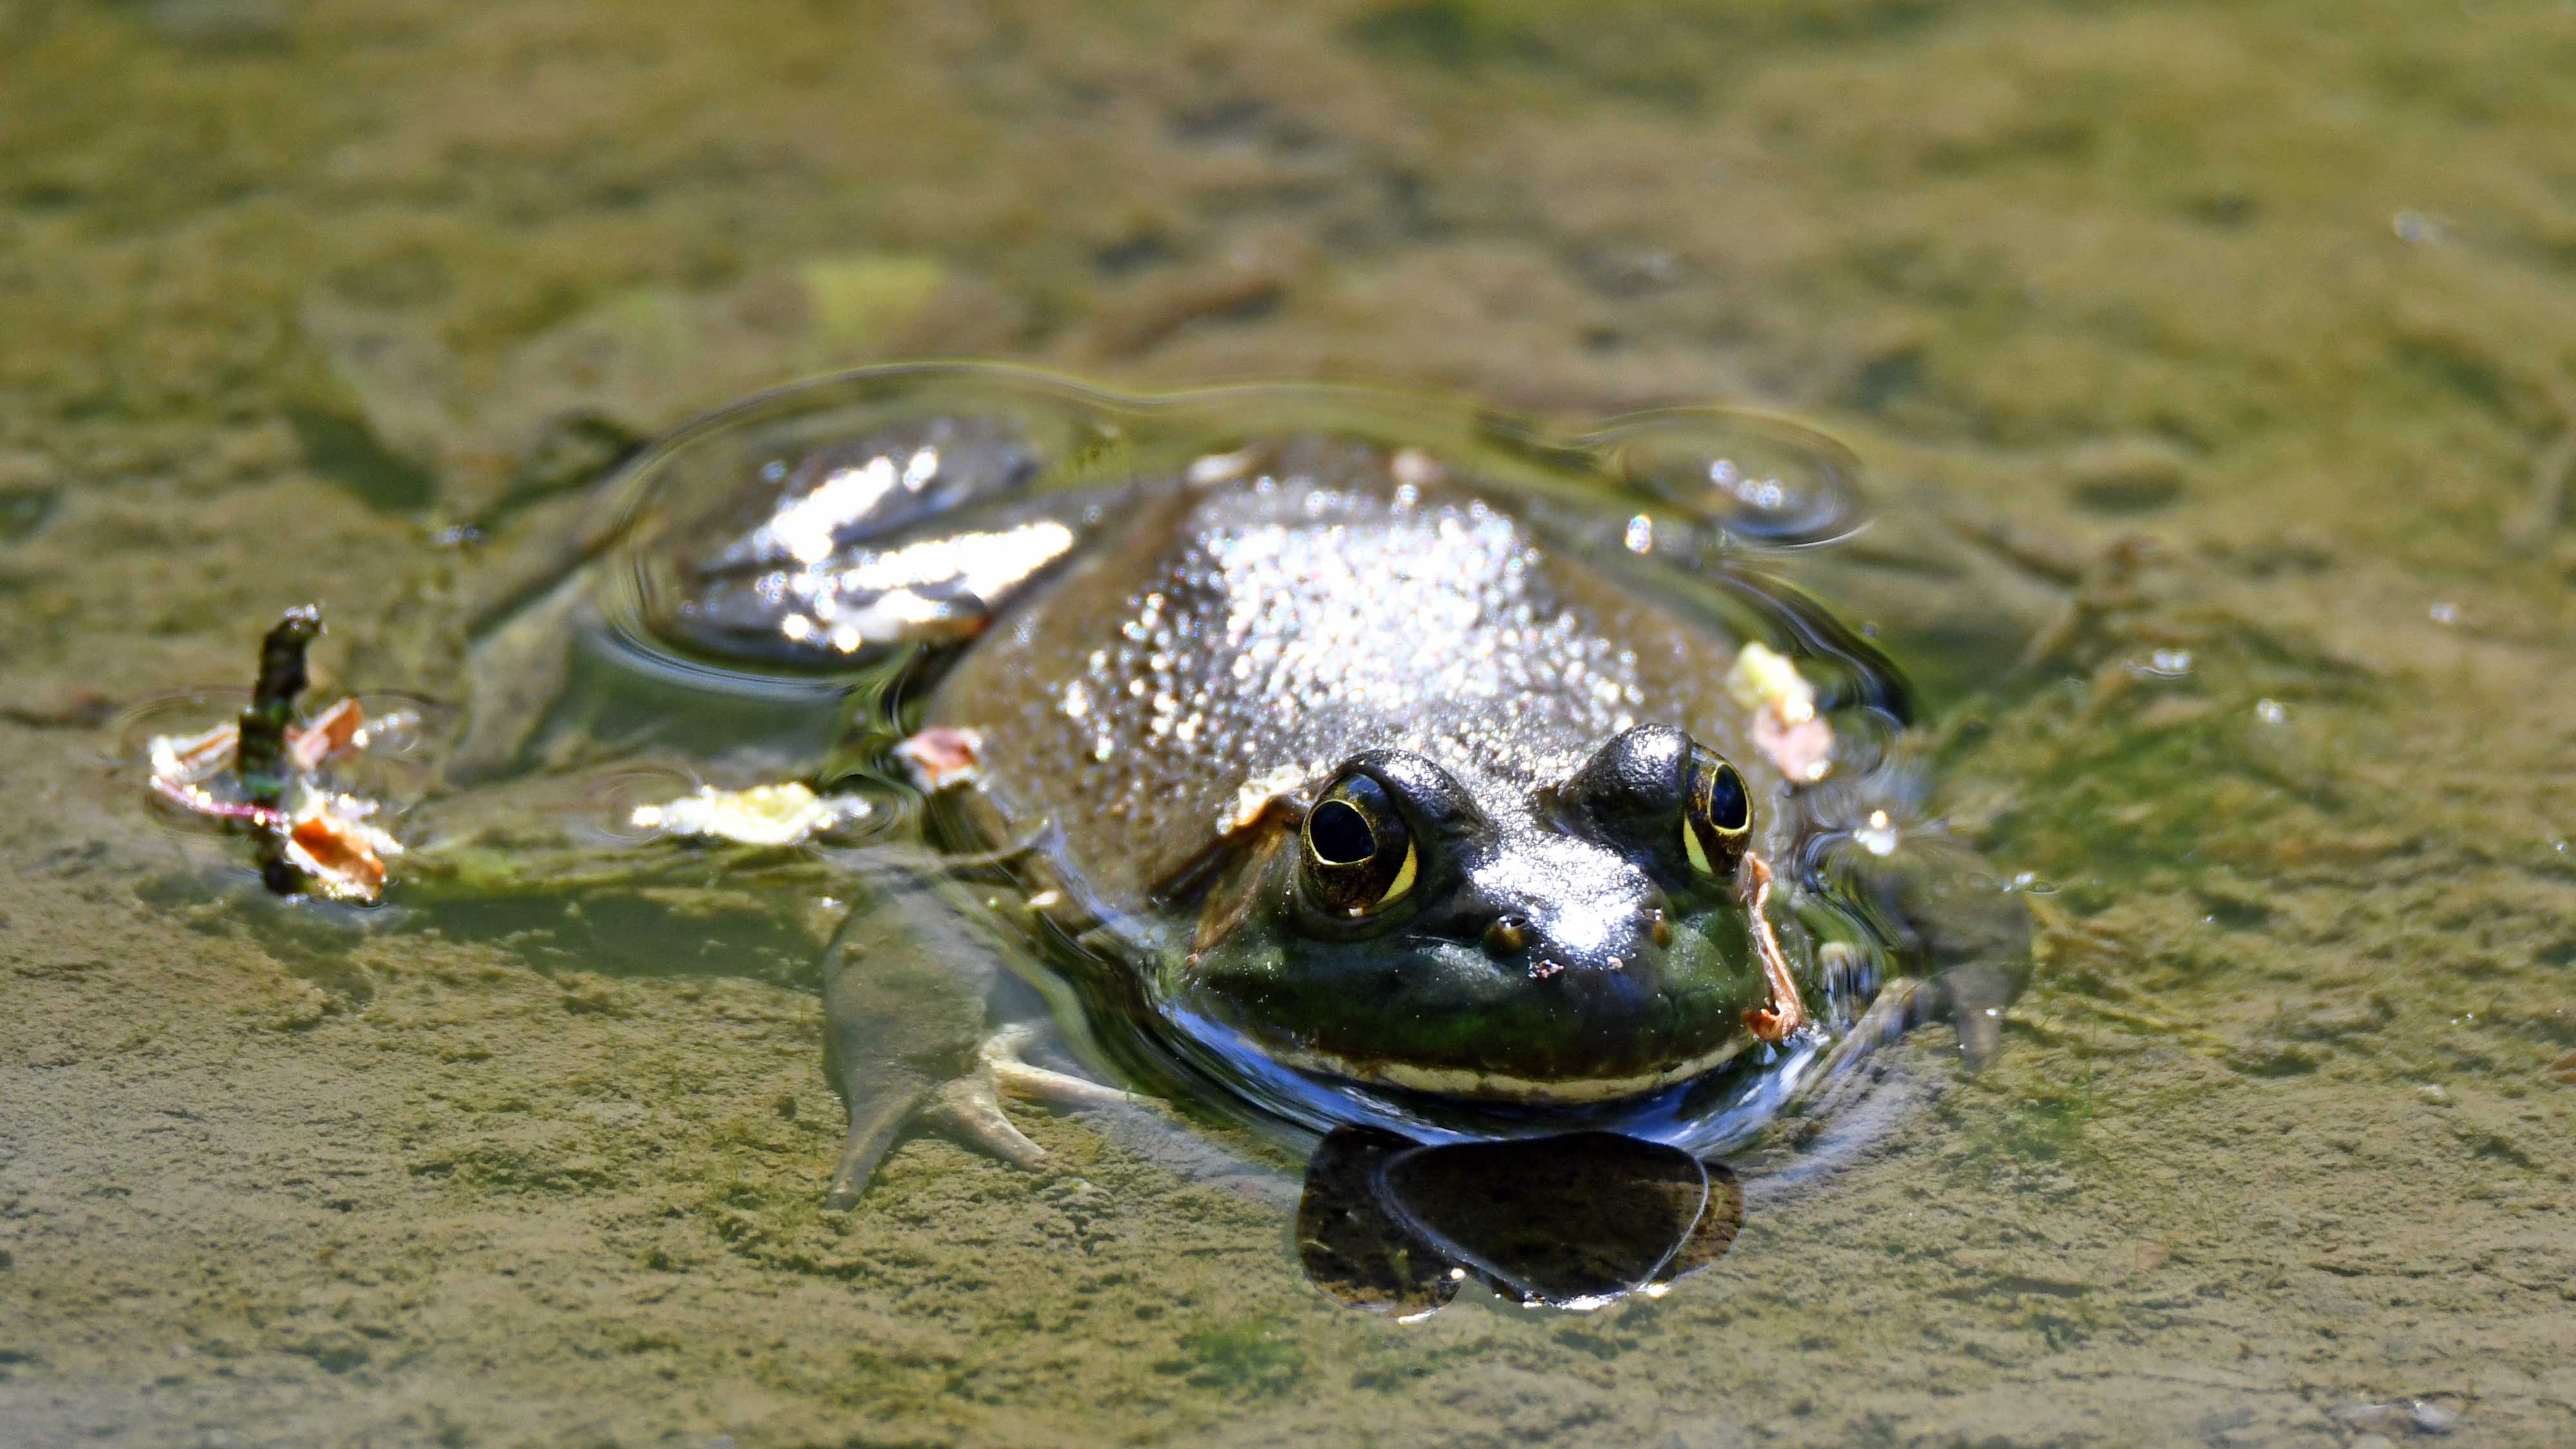 A bullfrog sitting in water.